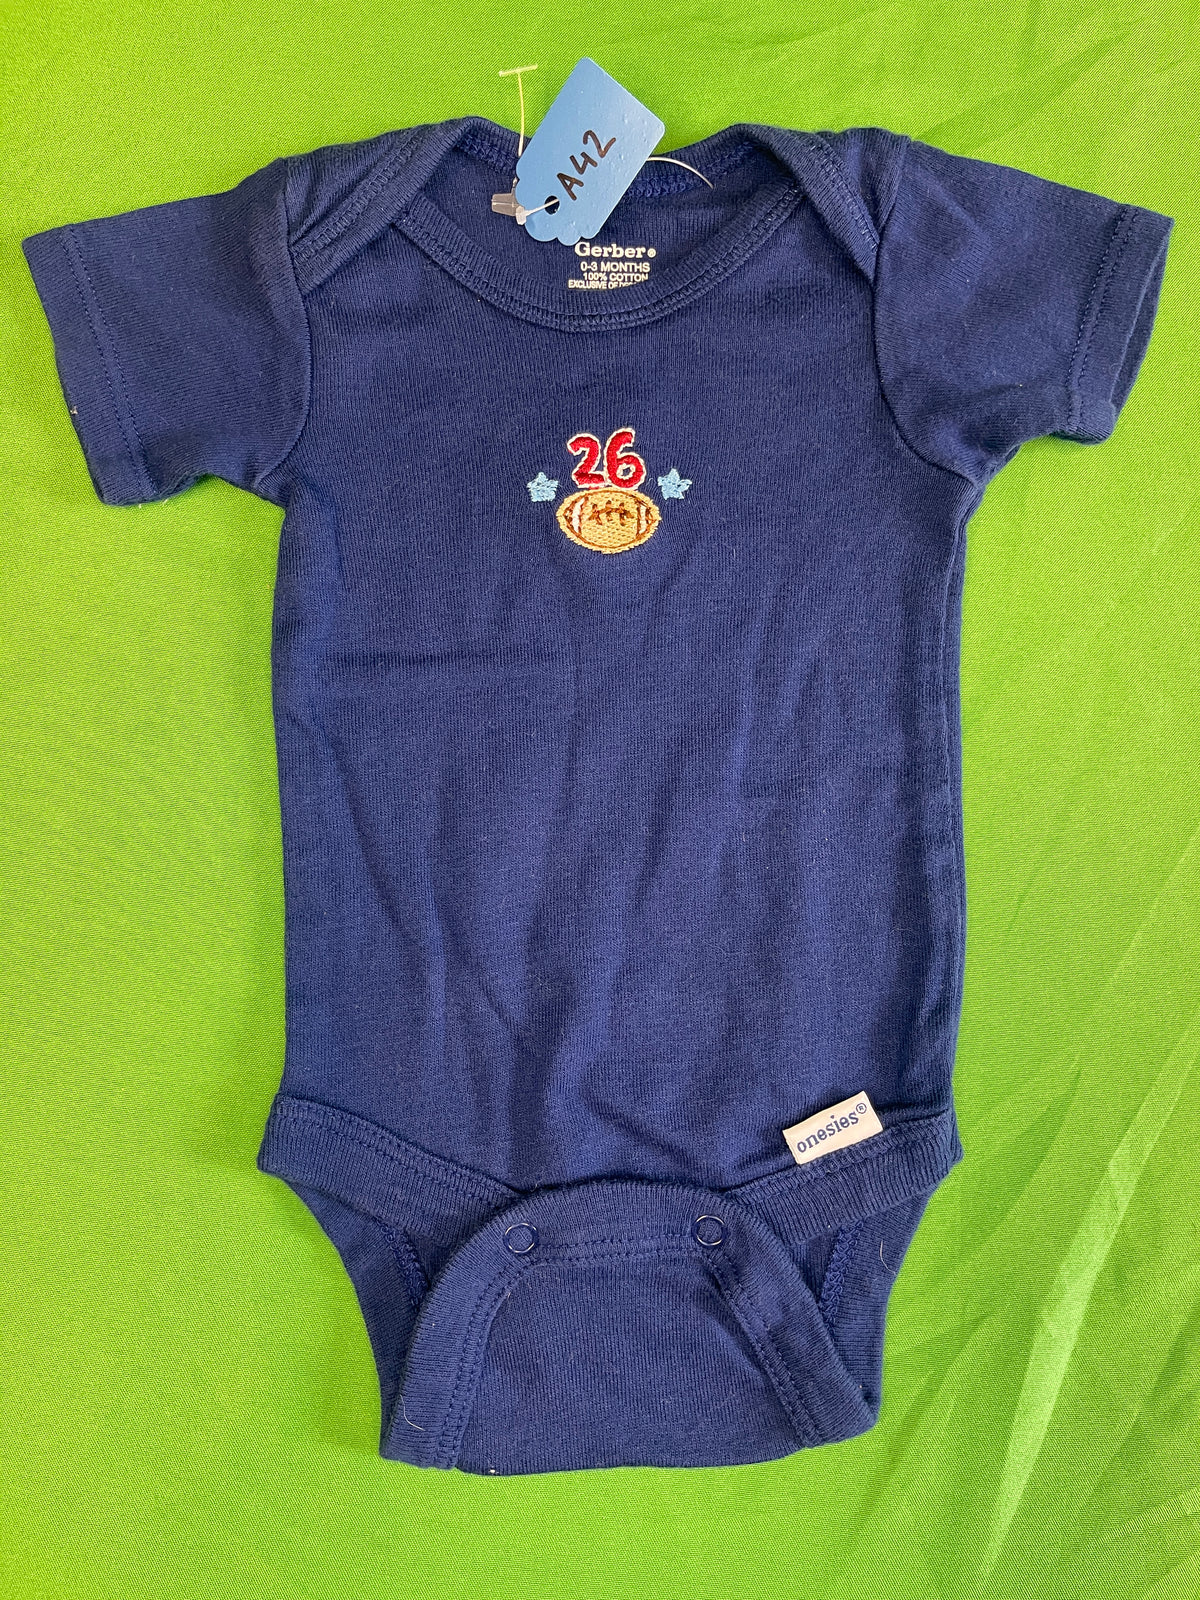 American Football #26 Bodysuit/Vest Infant Baby 0-3 Months